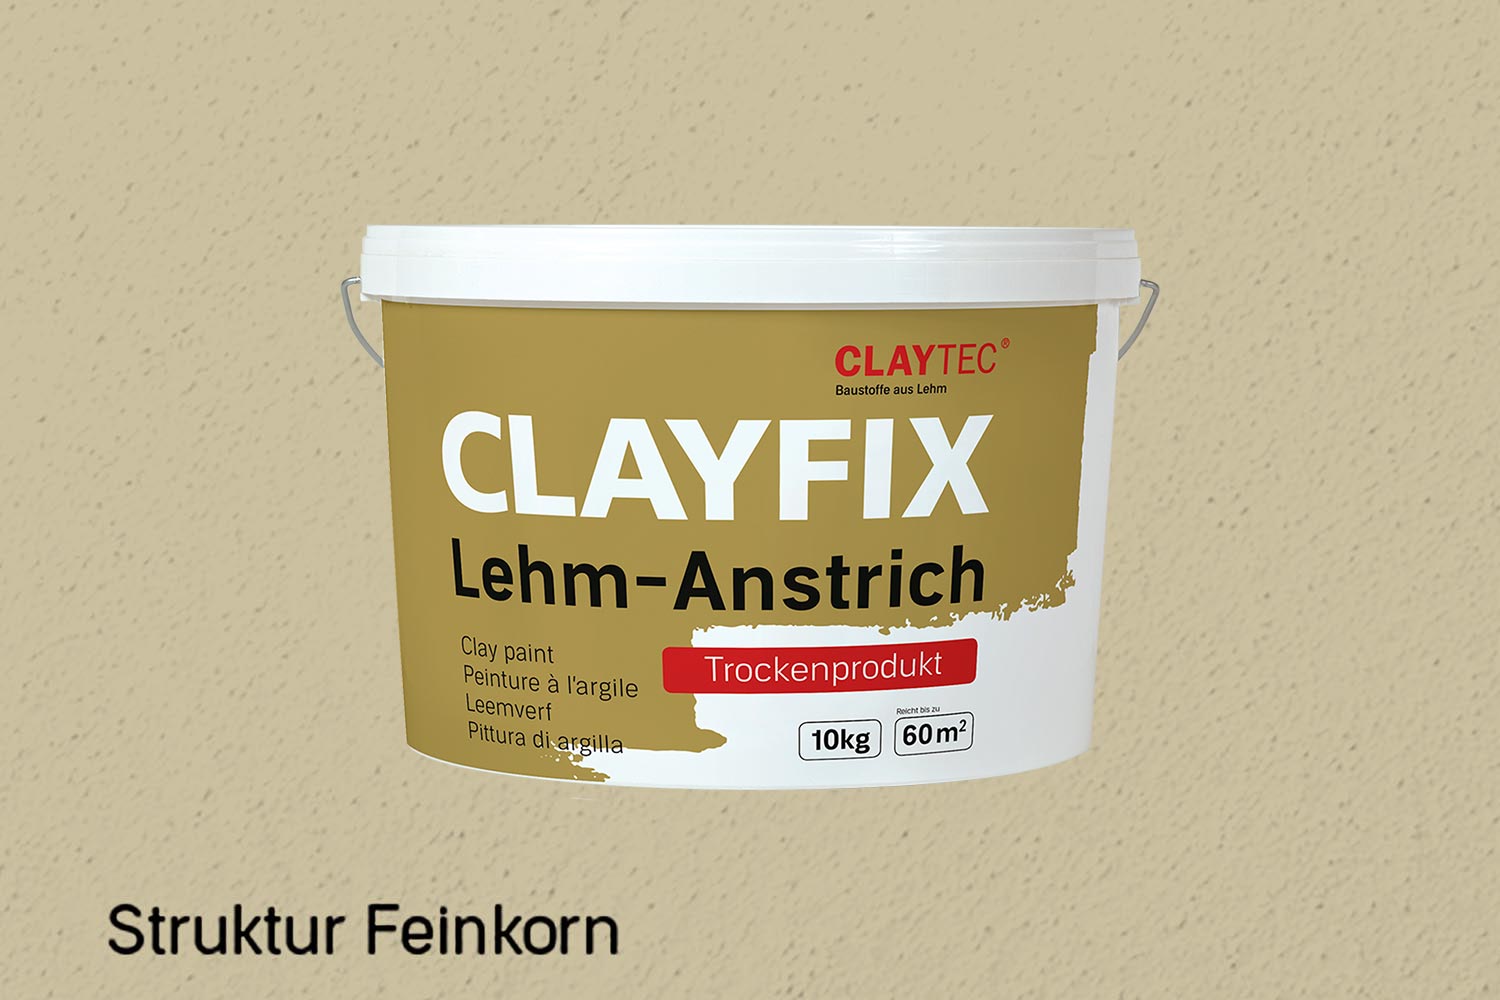 Claytec Clayfix Lehm-Anstrich Feinkorn